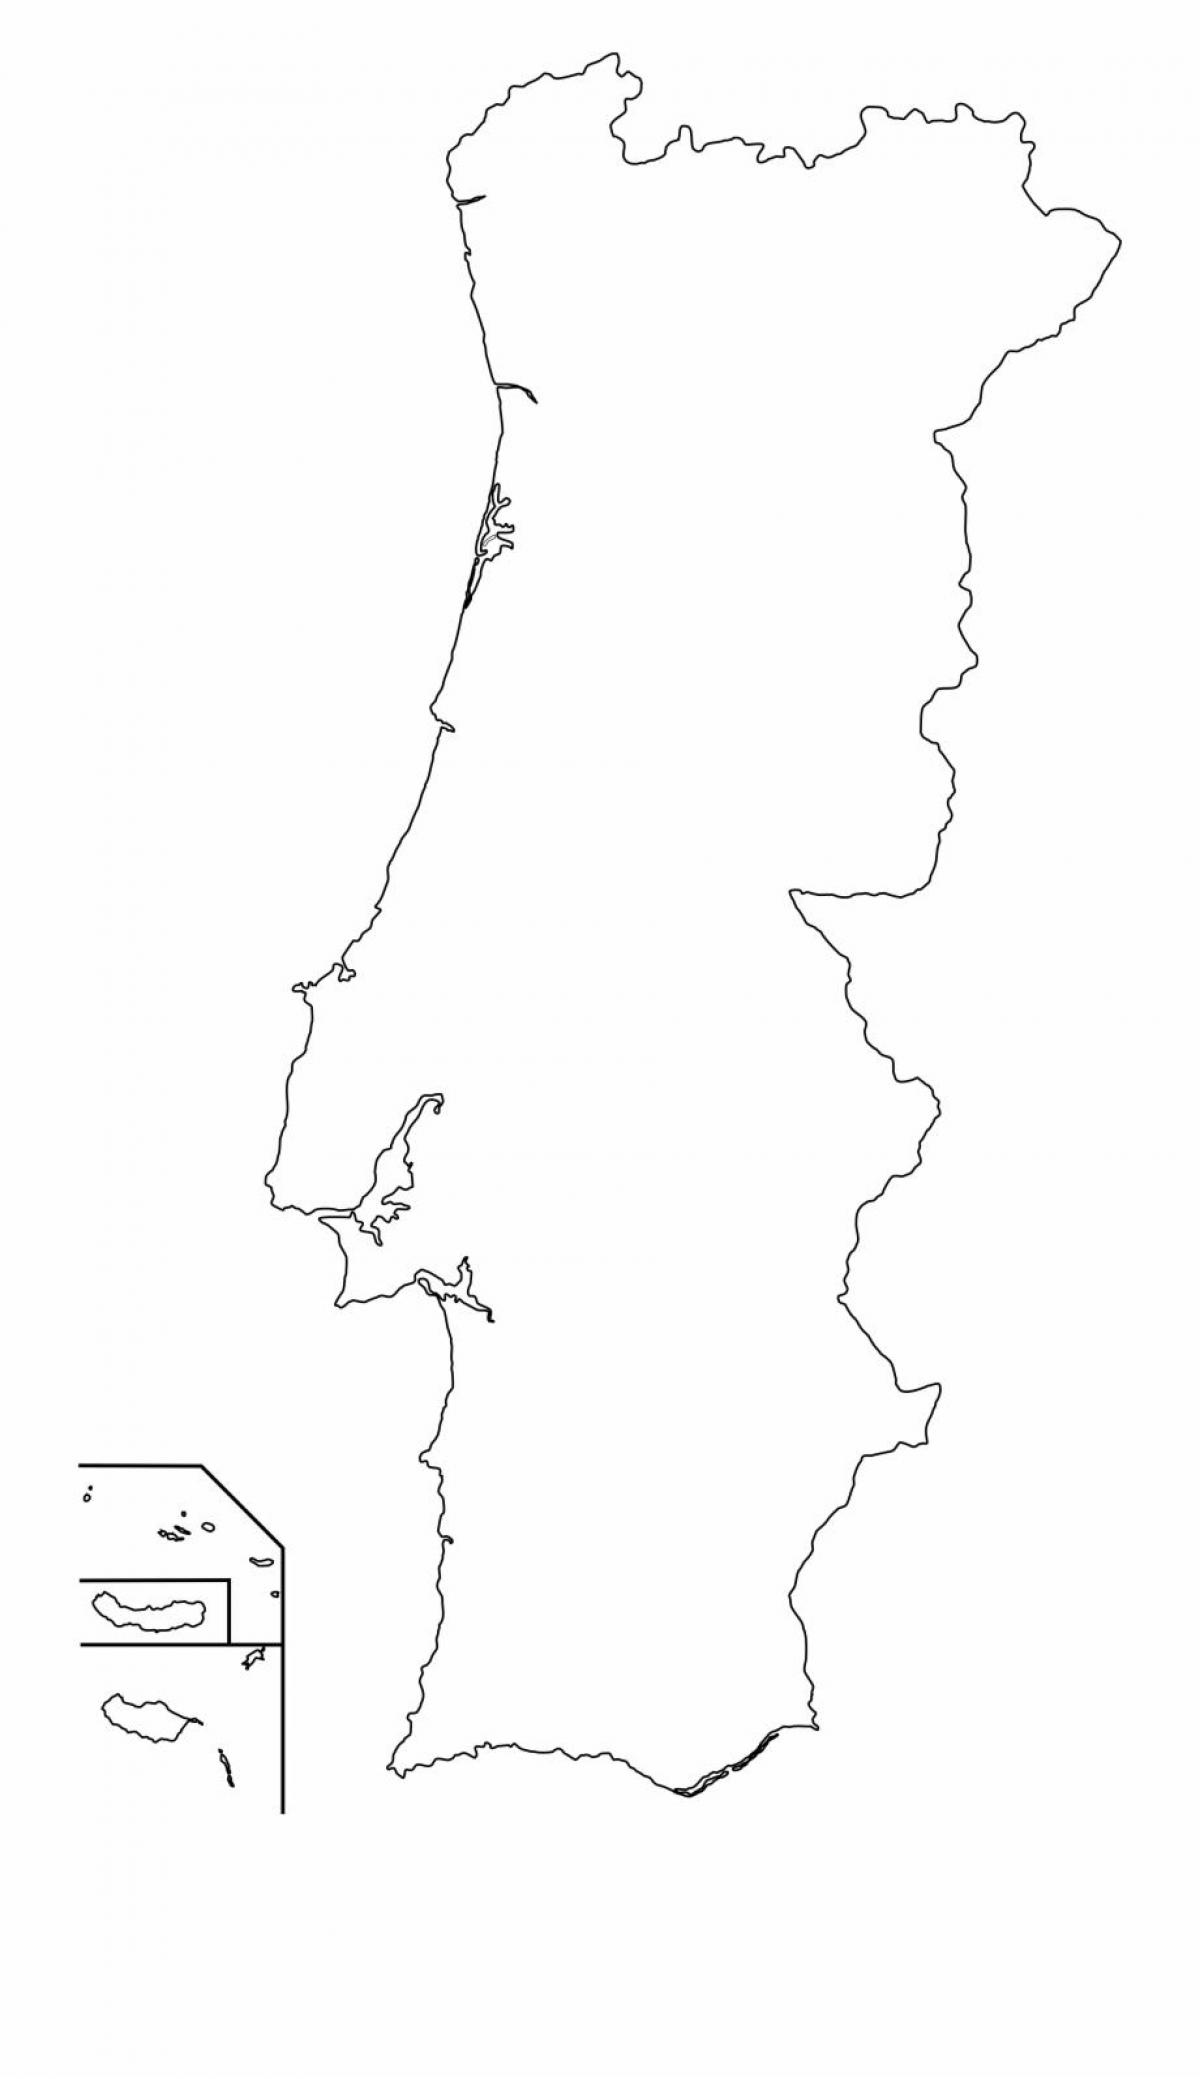 Mapa de contornos de Portugal